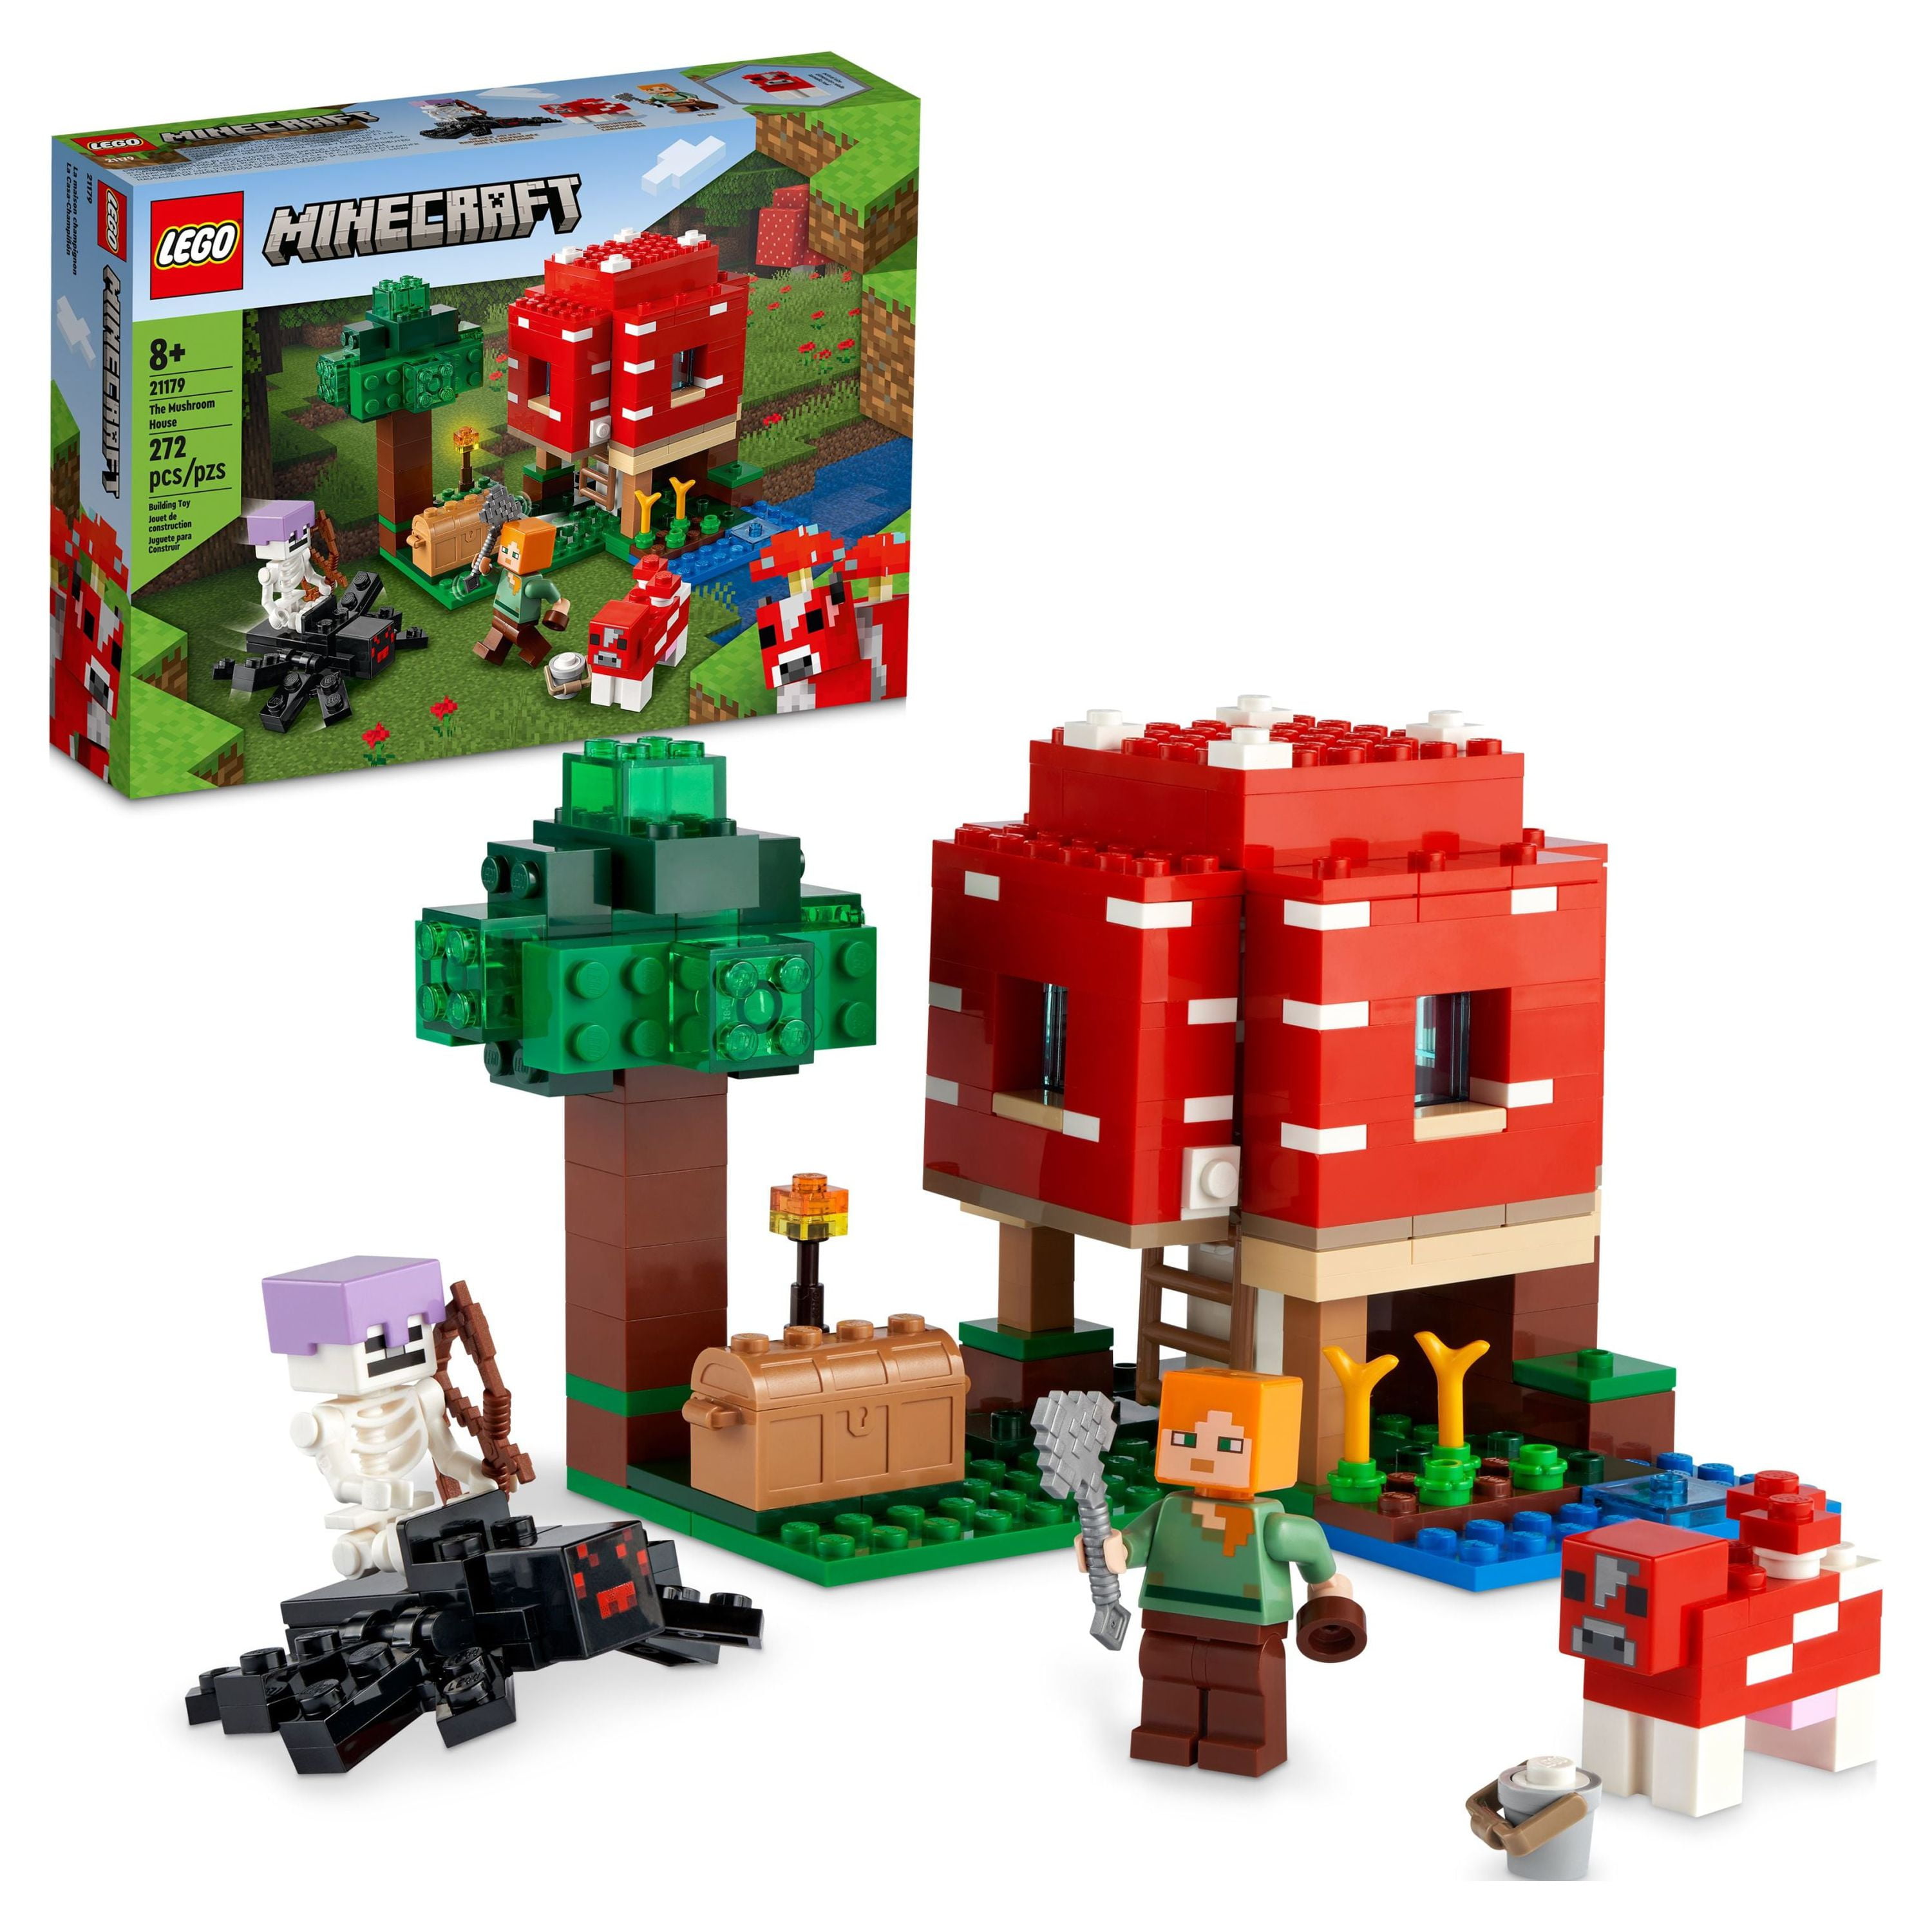 LEGO Minecraft The Mushroom House 21179 Building Toy Set for Kids Age 8  plus, Gift Idea with Alex, Spider Jockey & Mooshroom Animal Figures